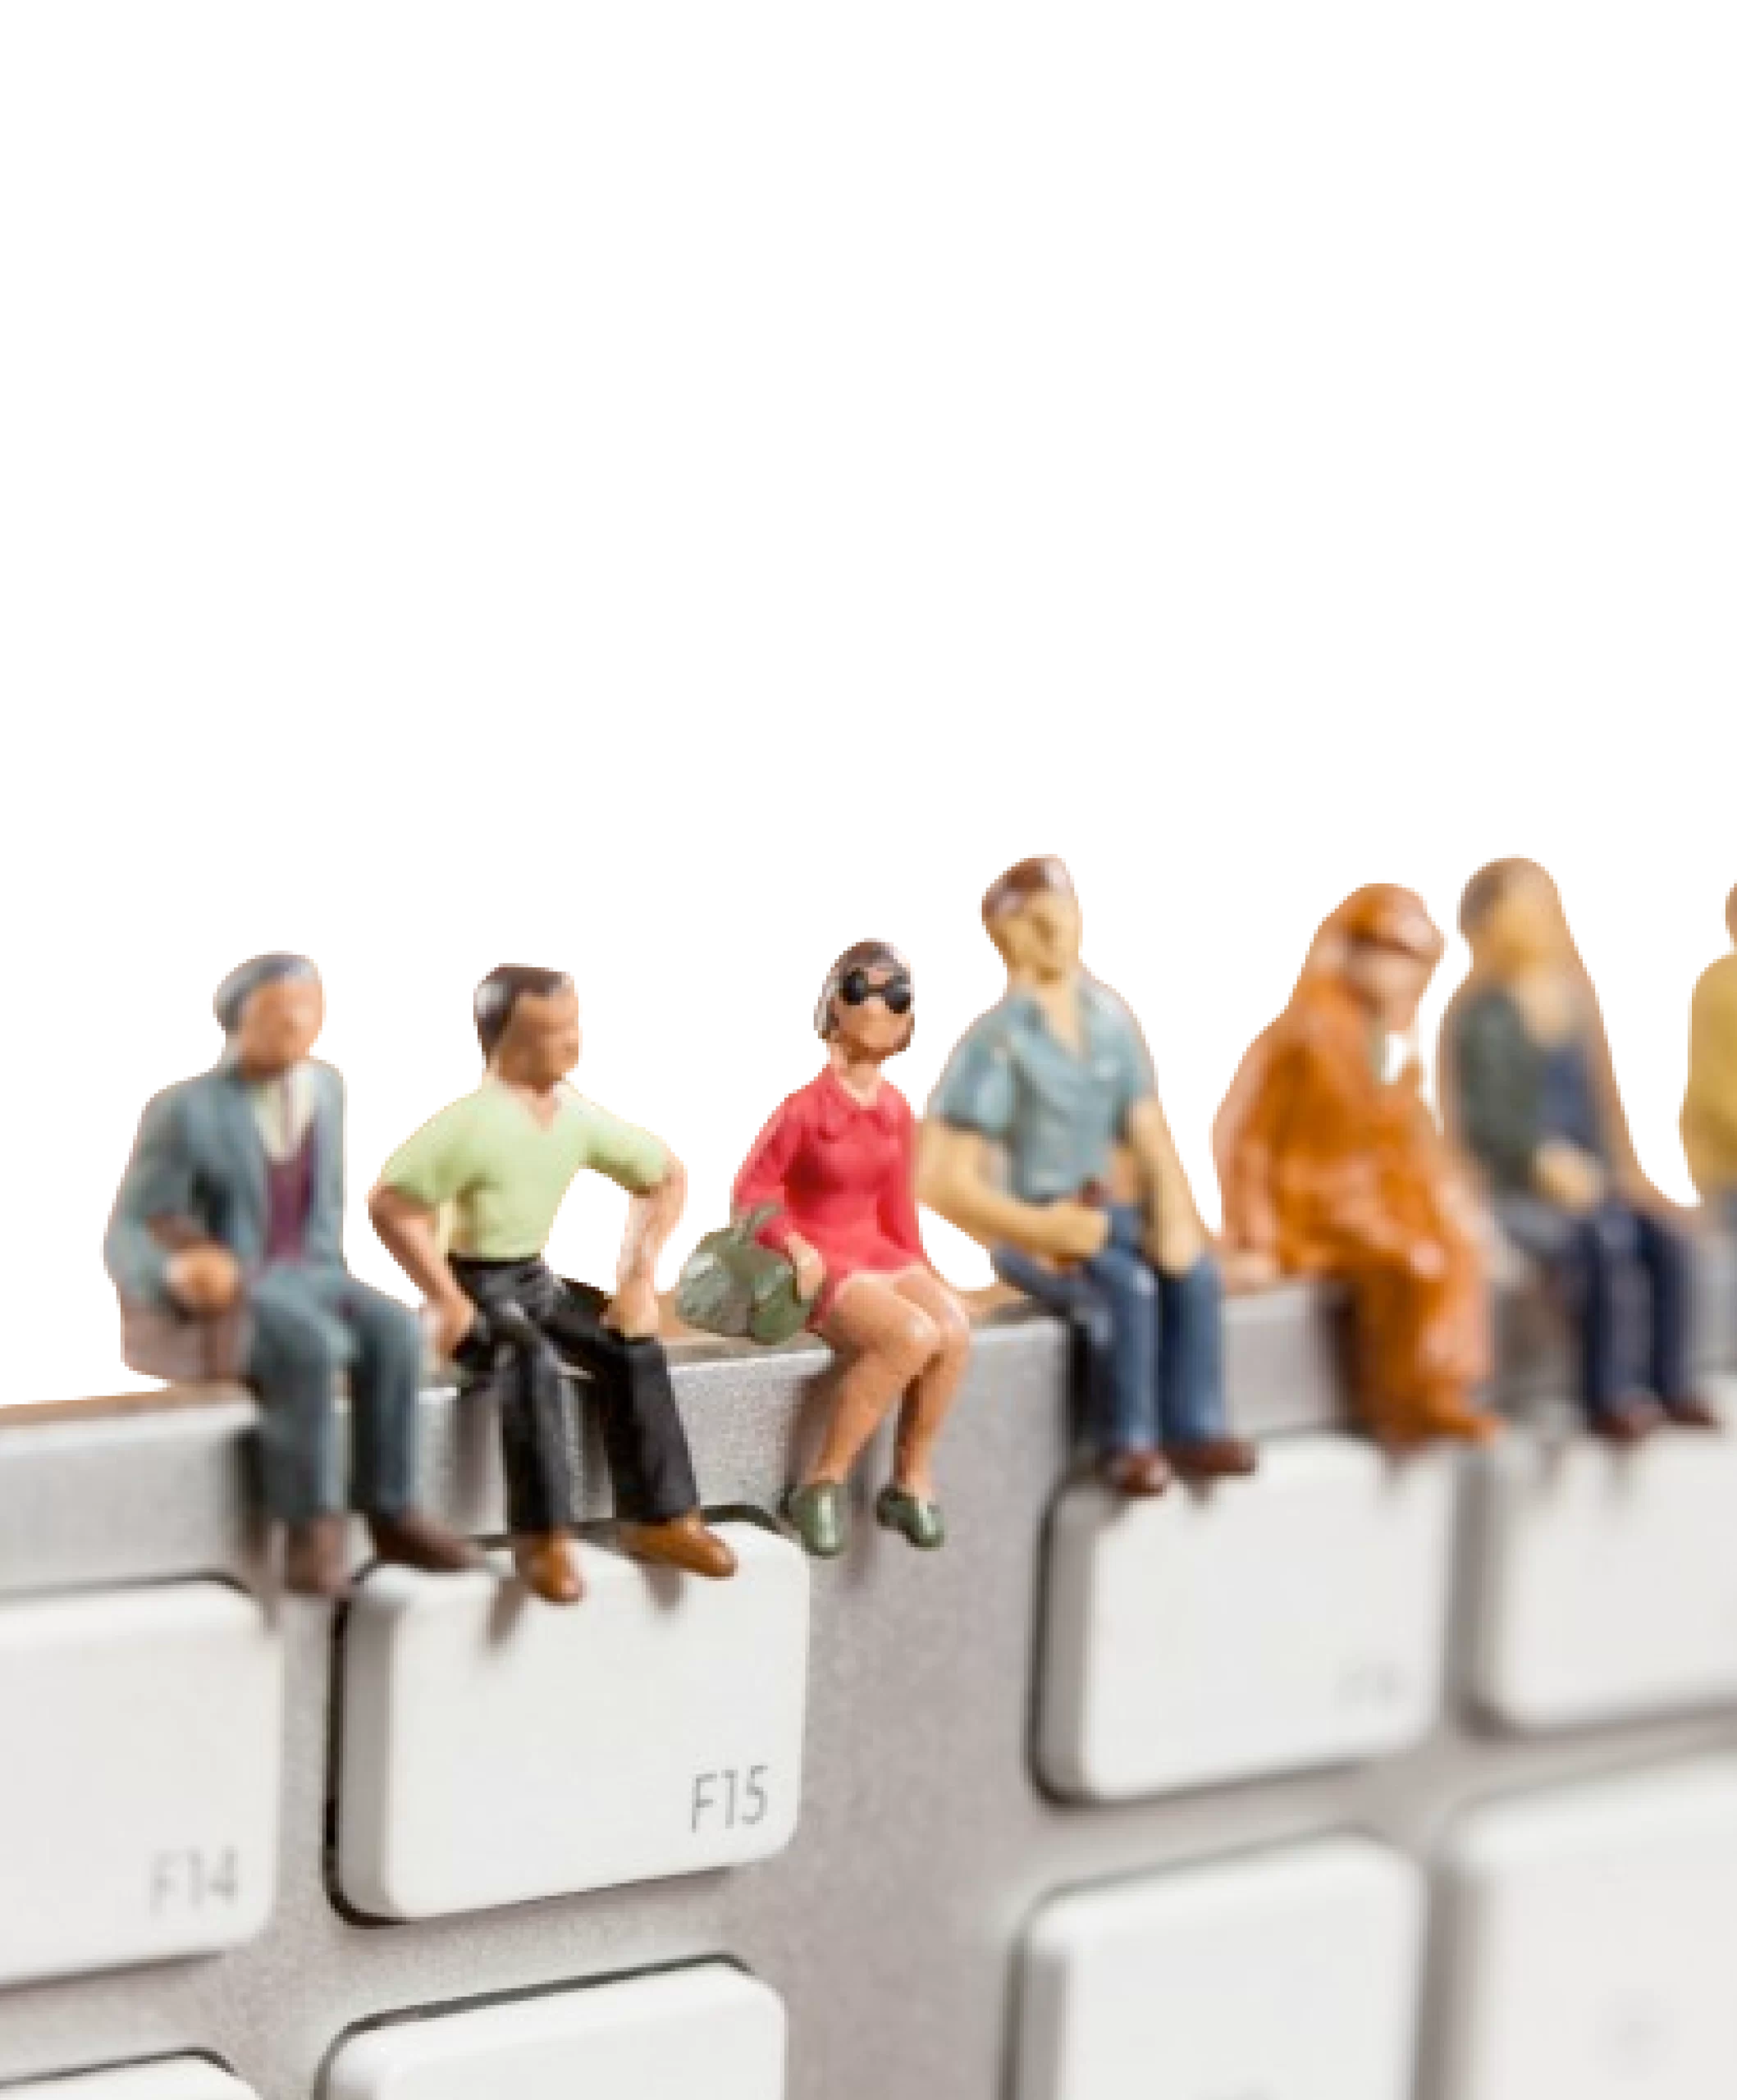 Miniature people sitting on a keyboard.